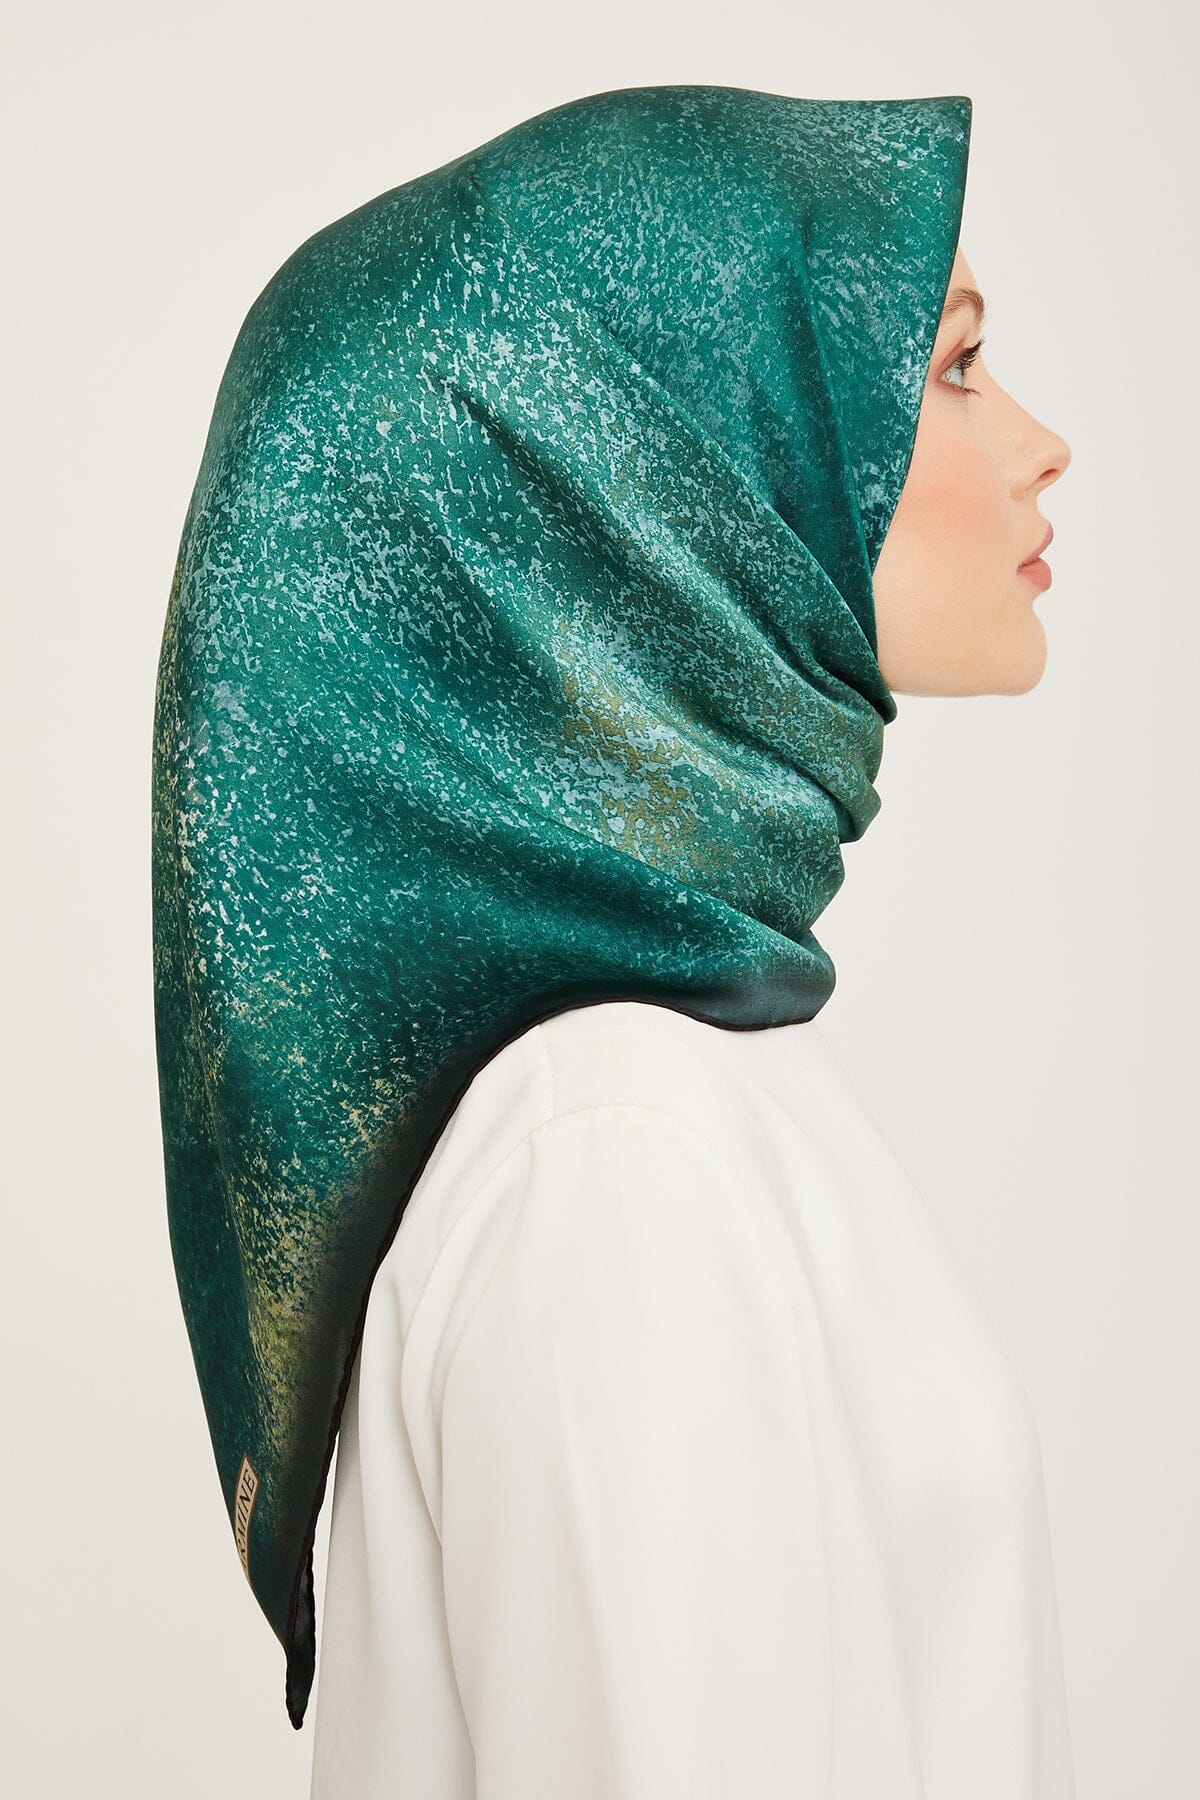 Armine Claude Everyday Silk Scarf #54 Silk Hijabs,Armine Armine 